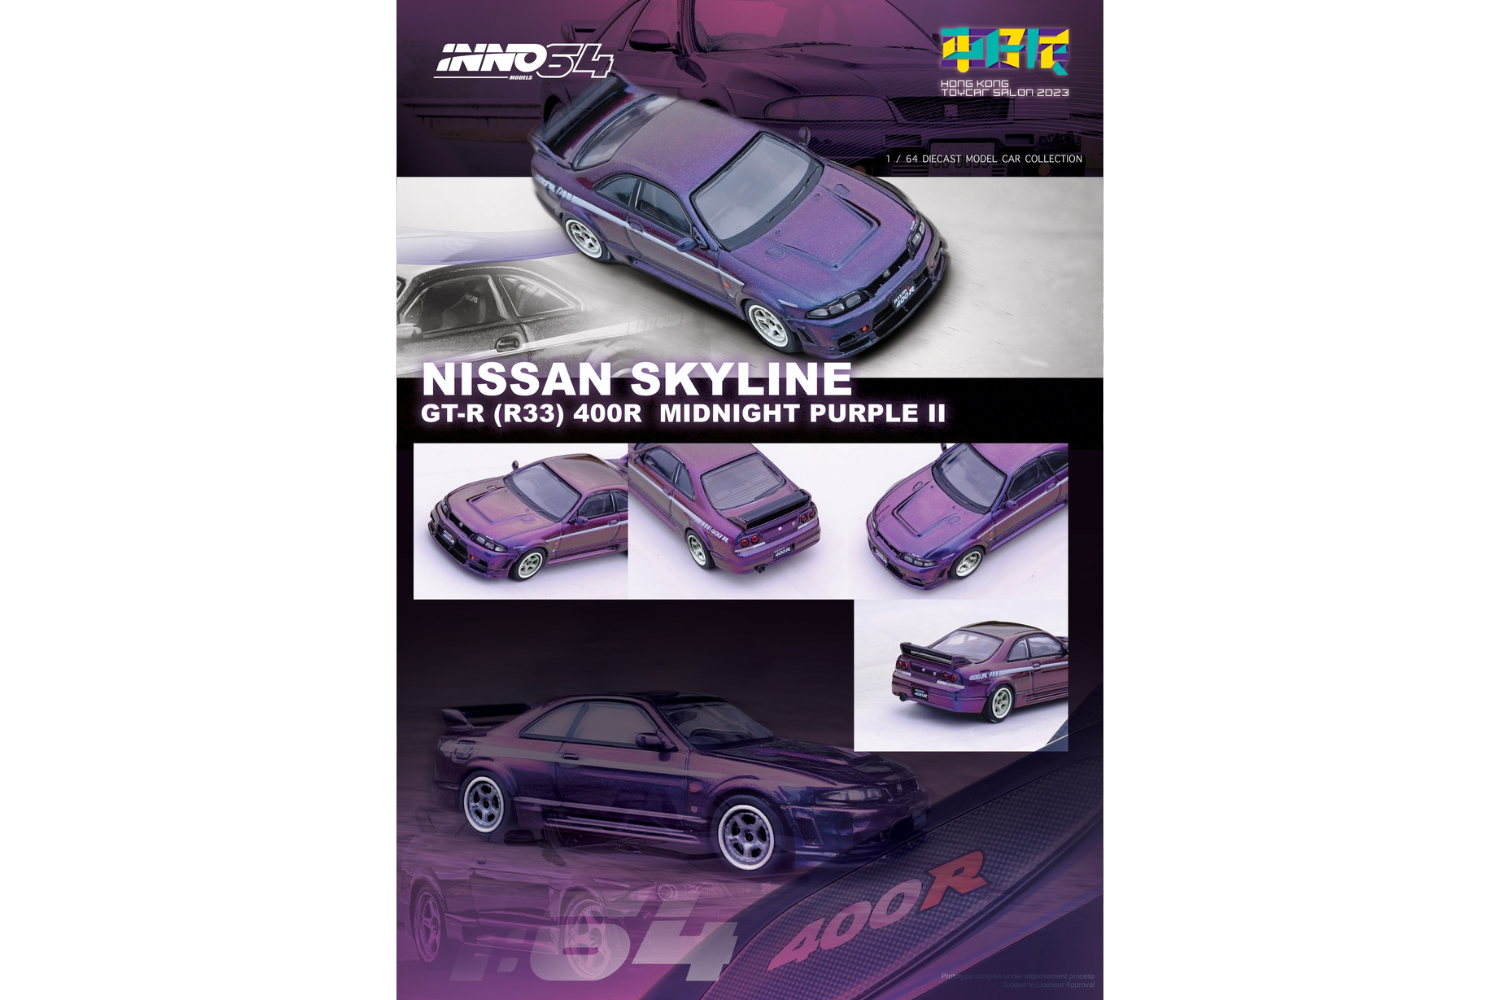 Inno64 Nissan Skyline GT-R (R33) Nismo 400R in Midnight Purple II